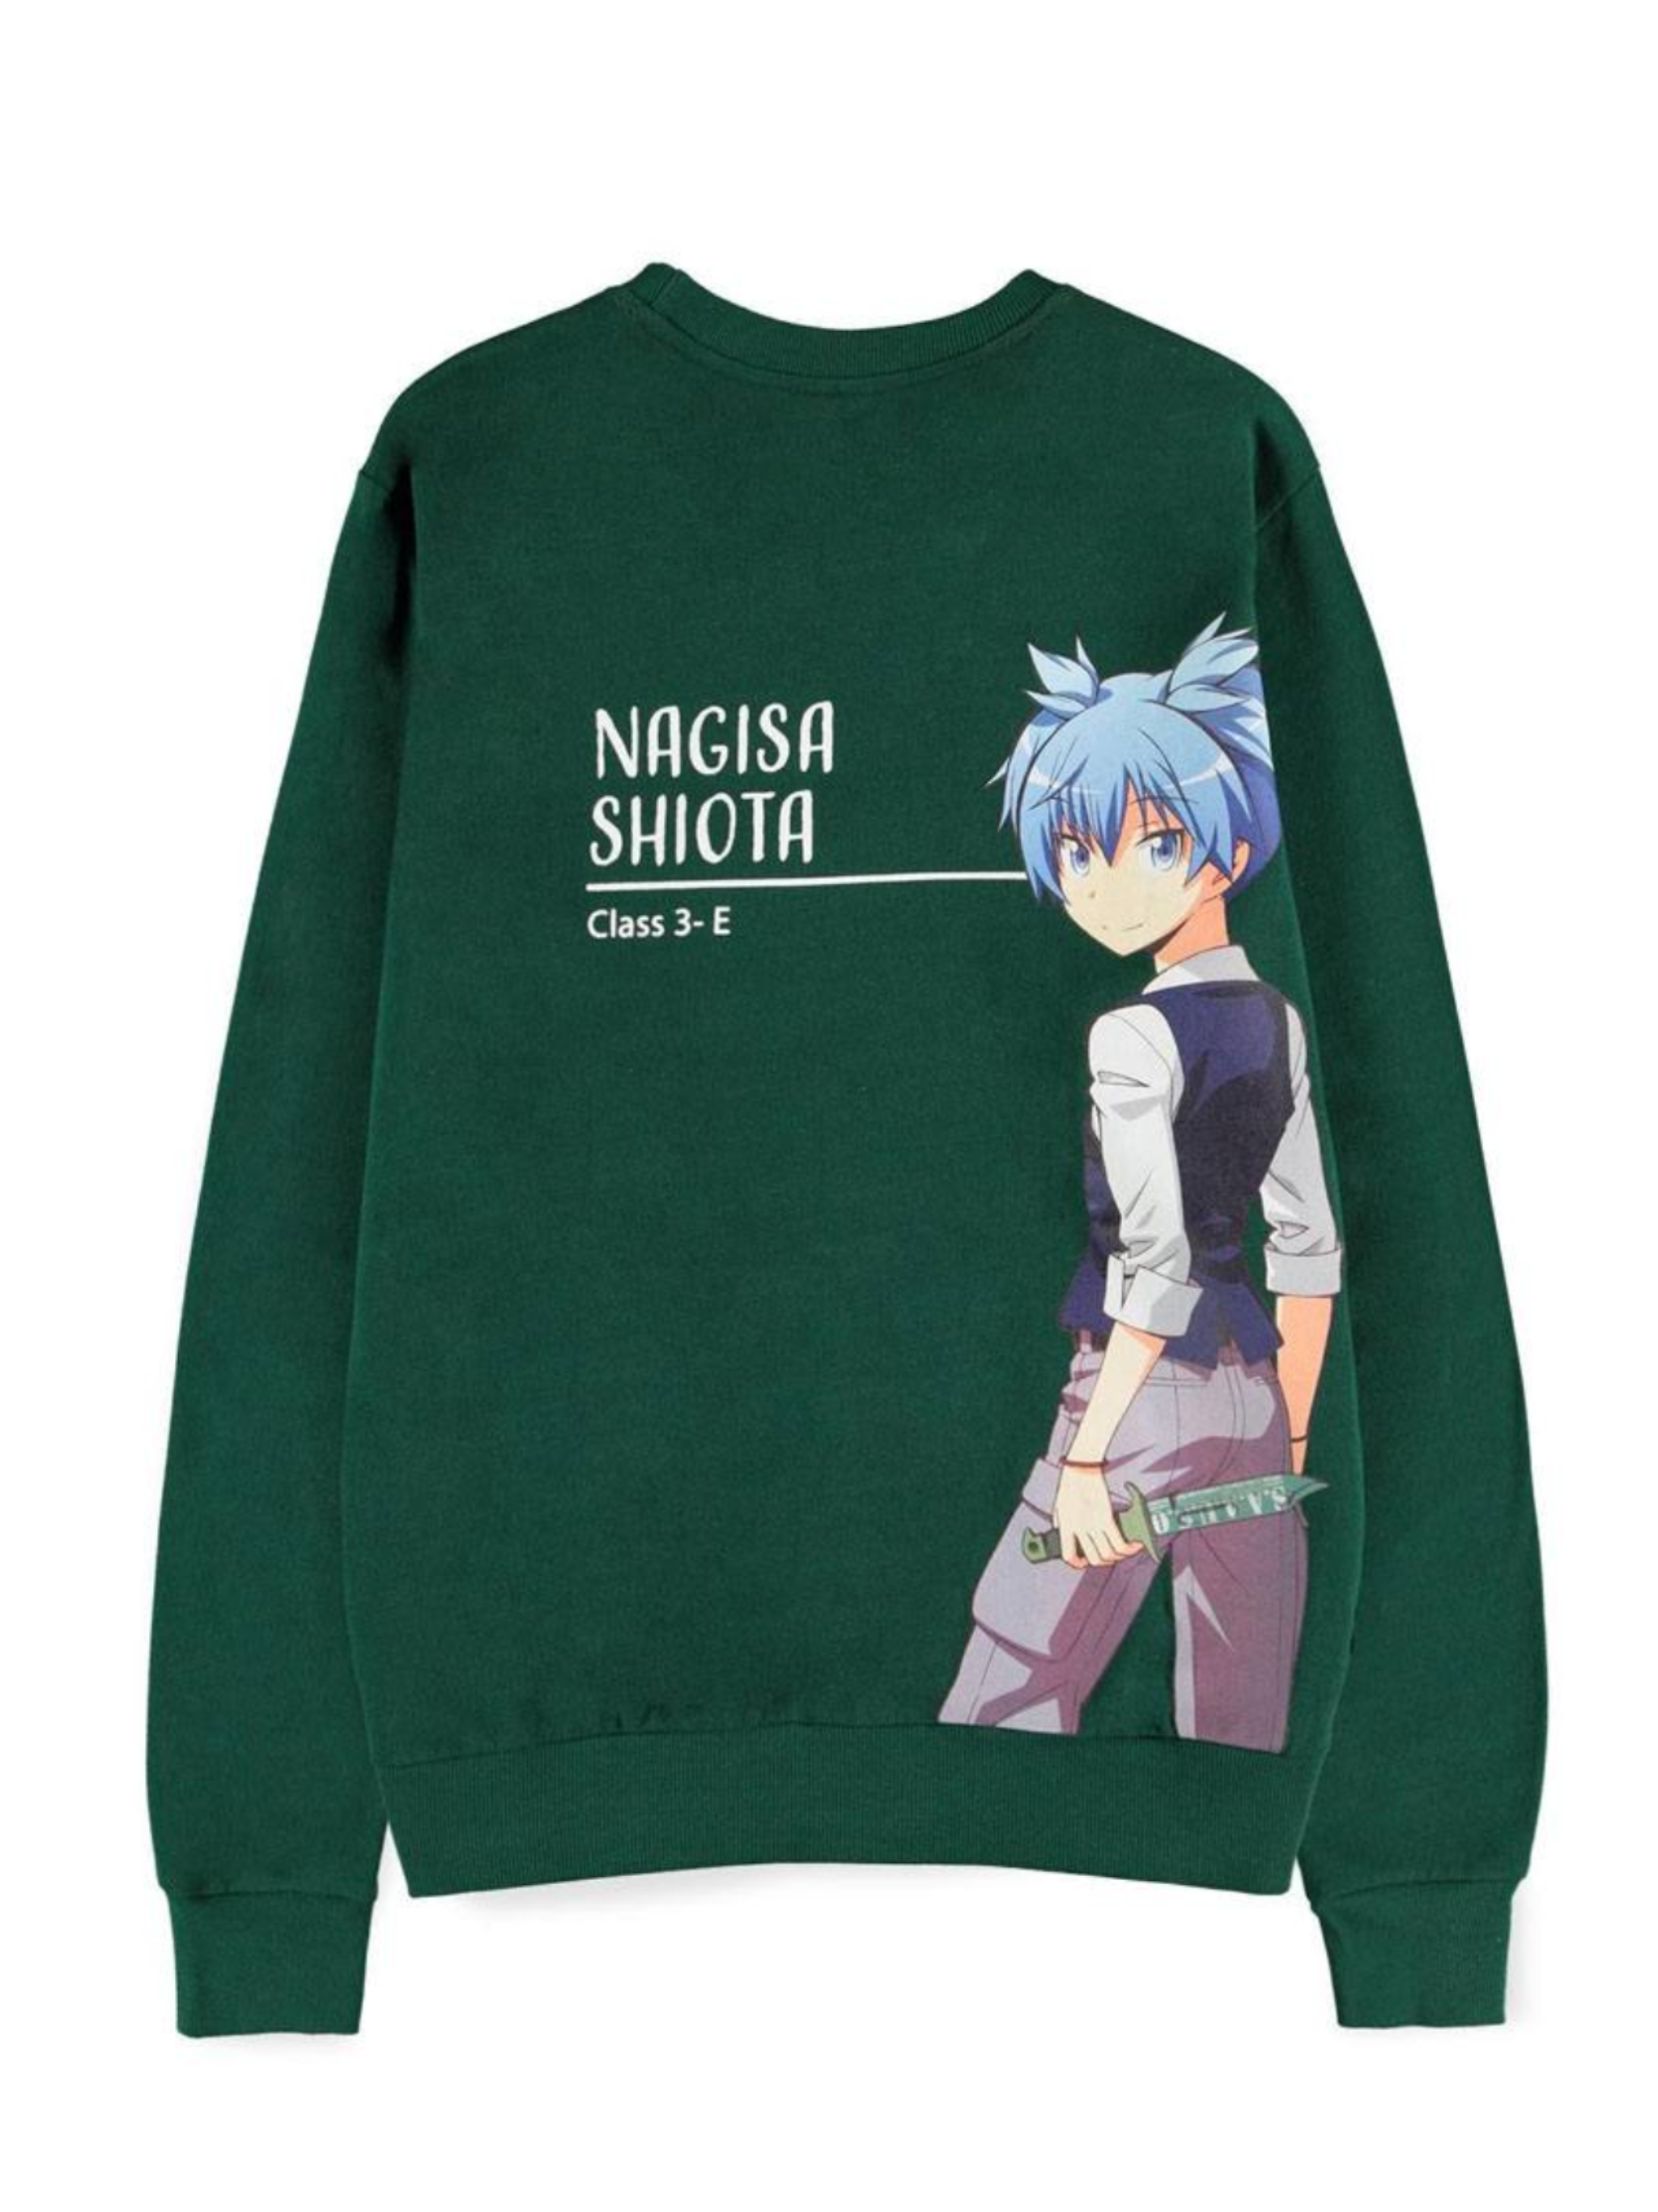 Assassination Classroom Sweatshirt Nagisa Shiota